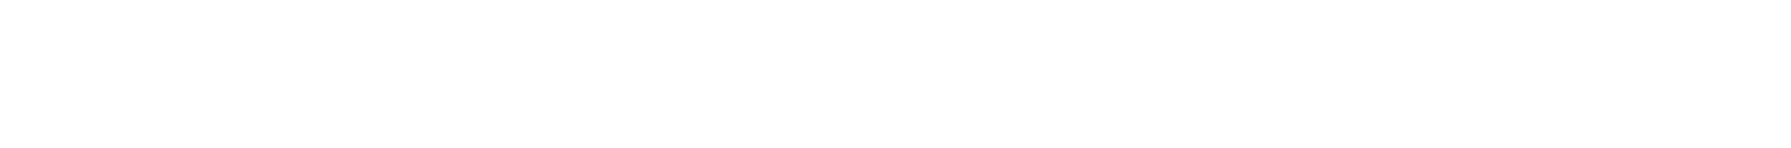 Marsh & McLennan Companies Logo groß für dunkle Hintergründe (transparentes PNG)